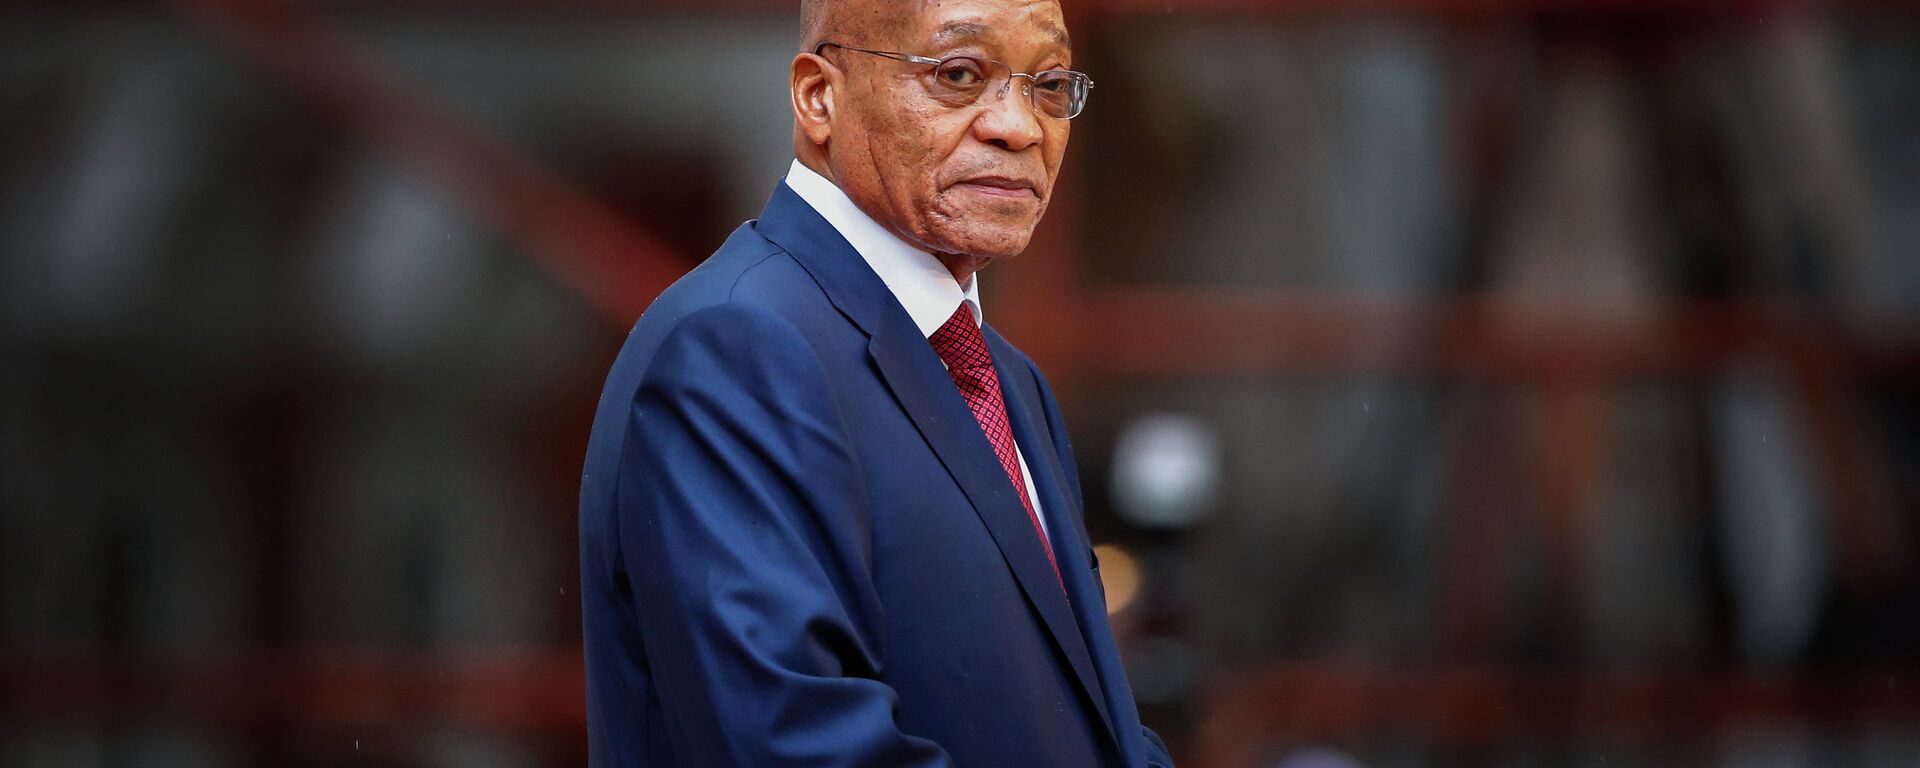 Jacob Zuma - Sputnik Afrique, 1920, 13.02.2018